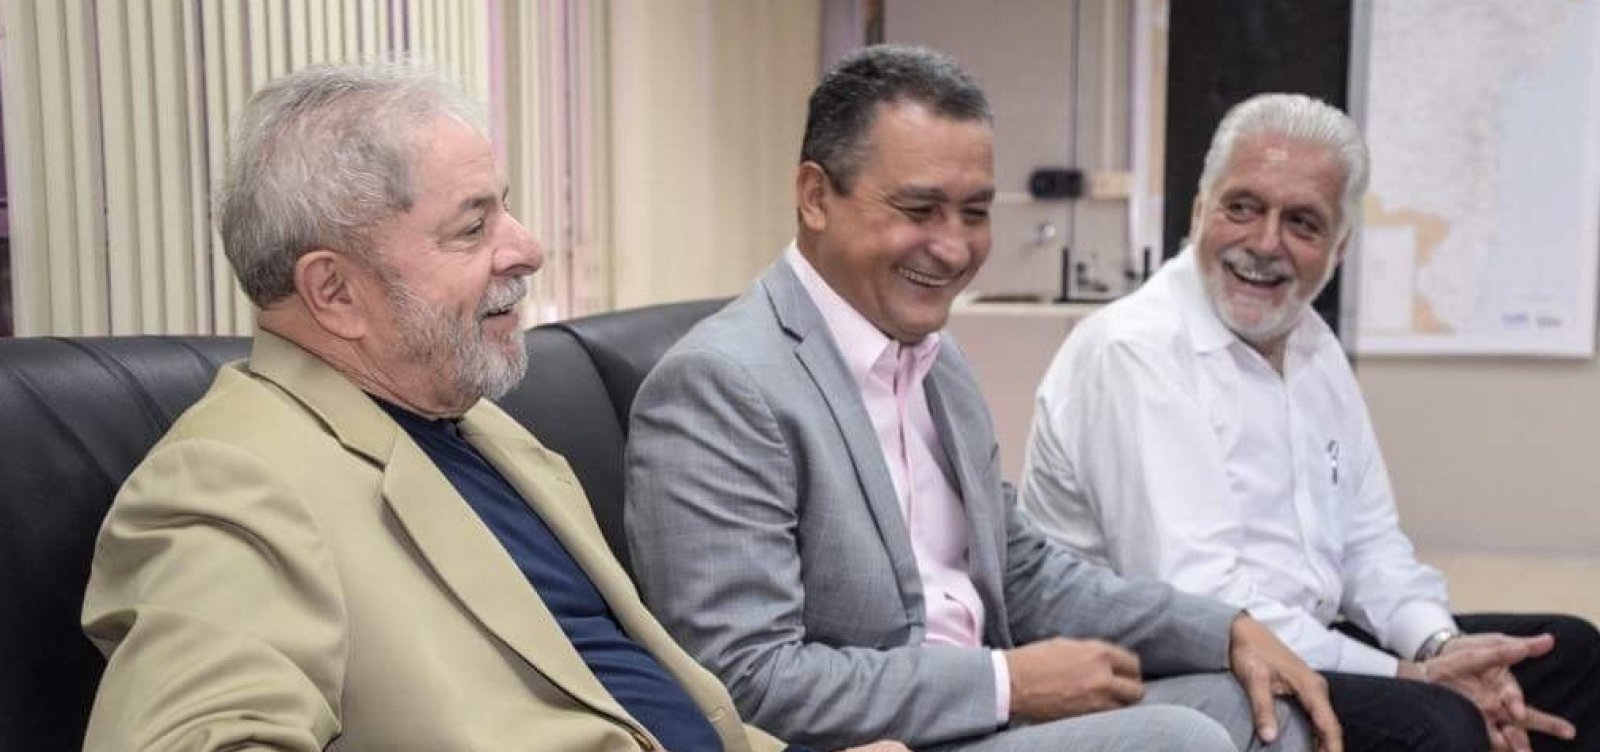 Em registro de candidatura de Lula, Rui pede visita de Haddad à Bahia 